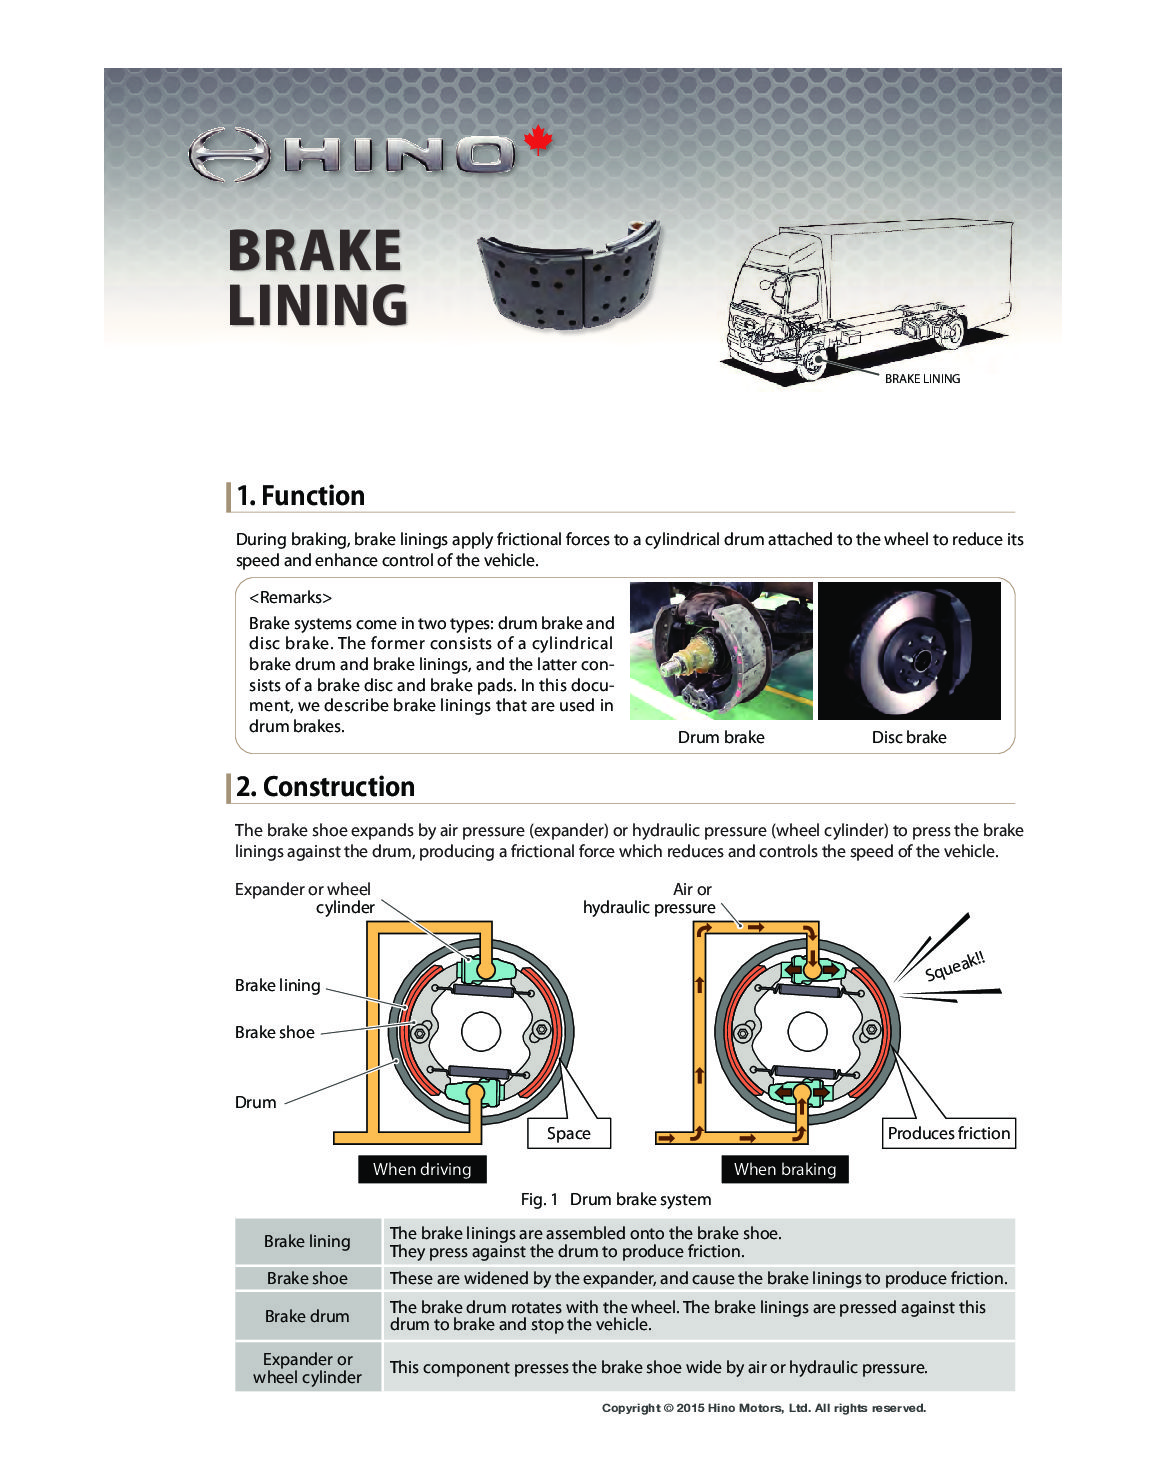 English brake lining Doc